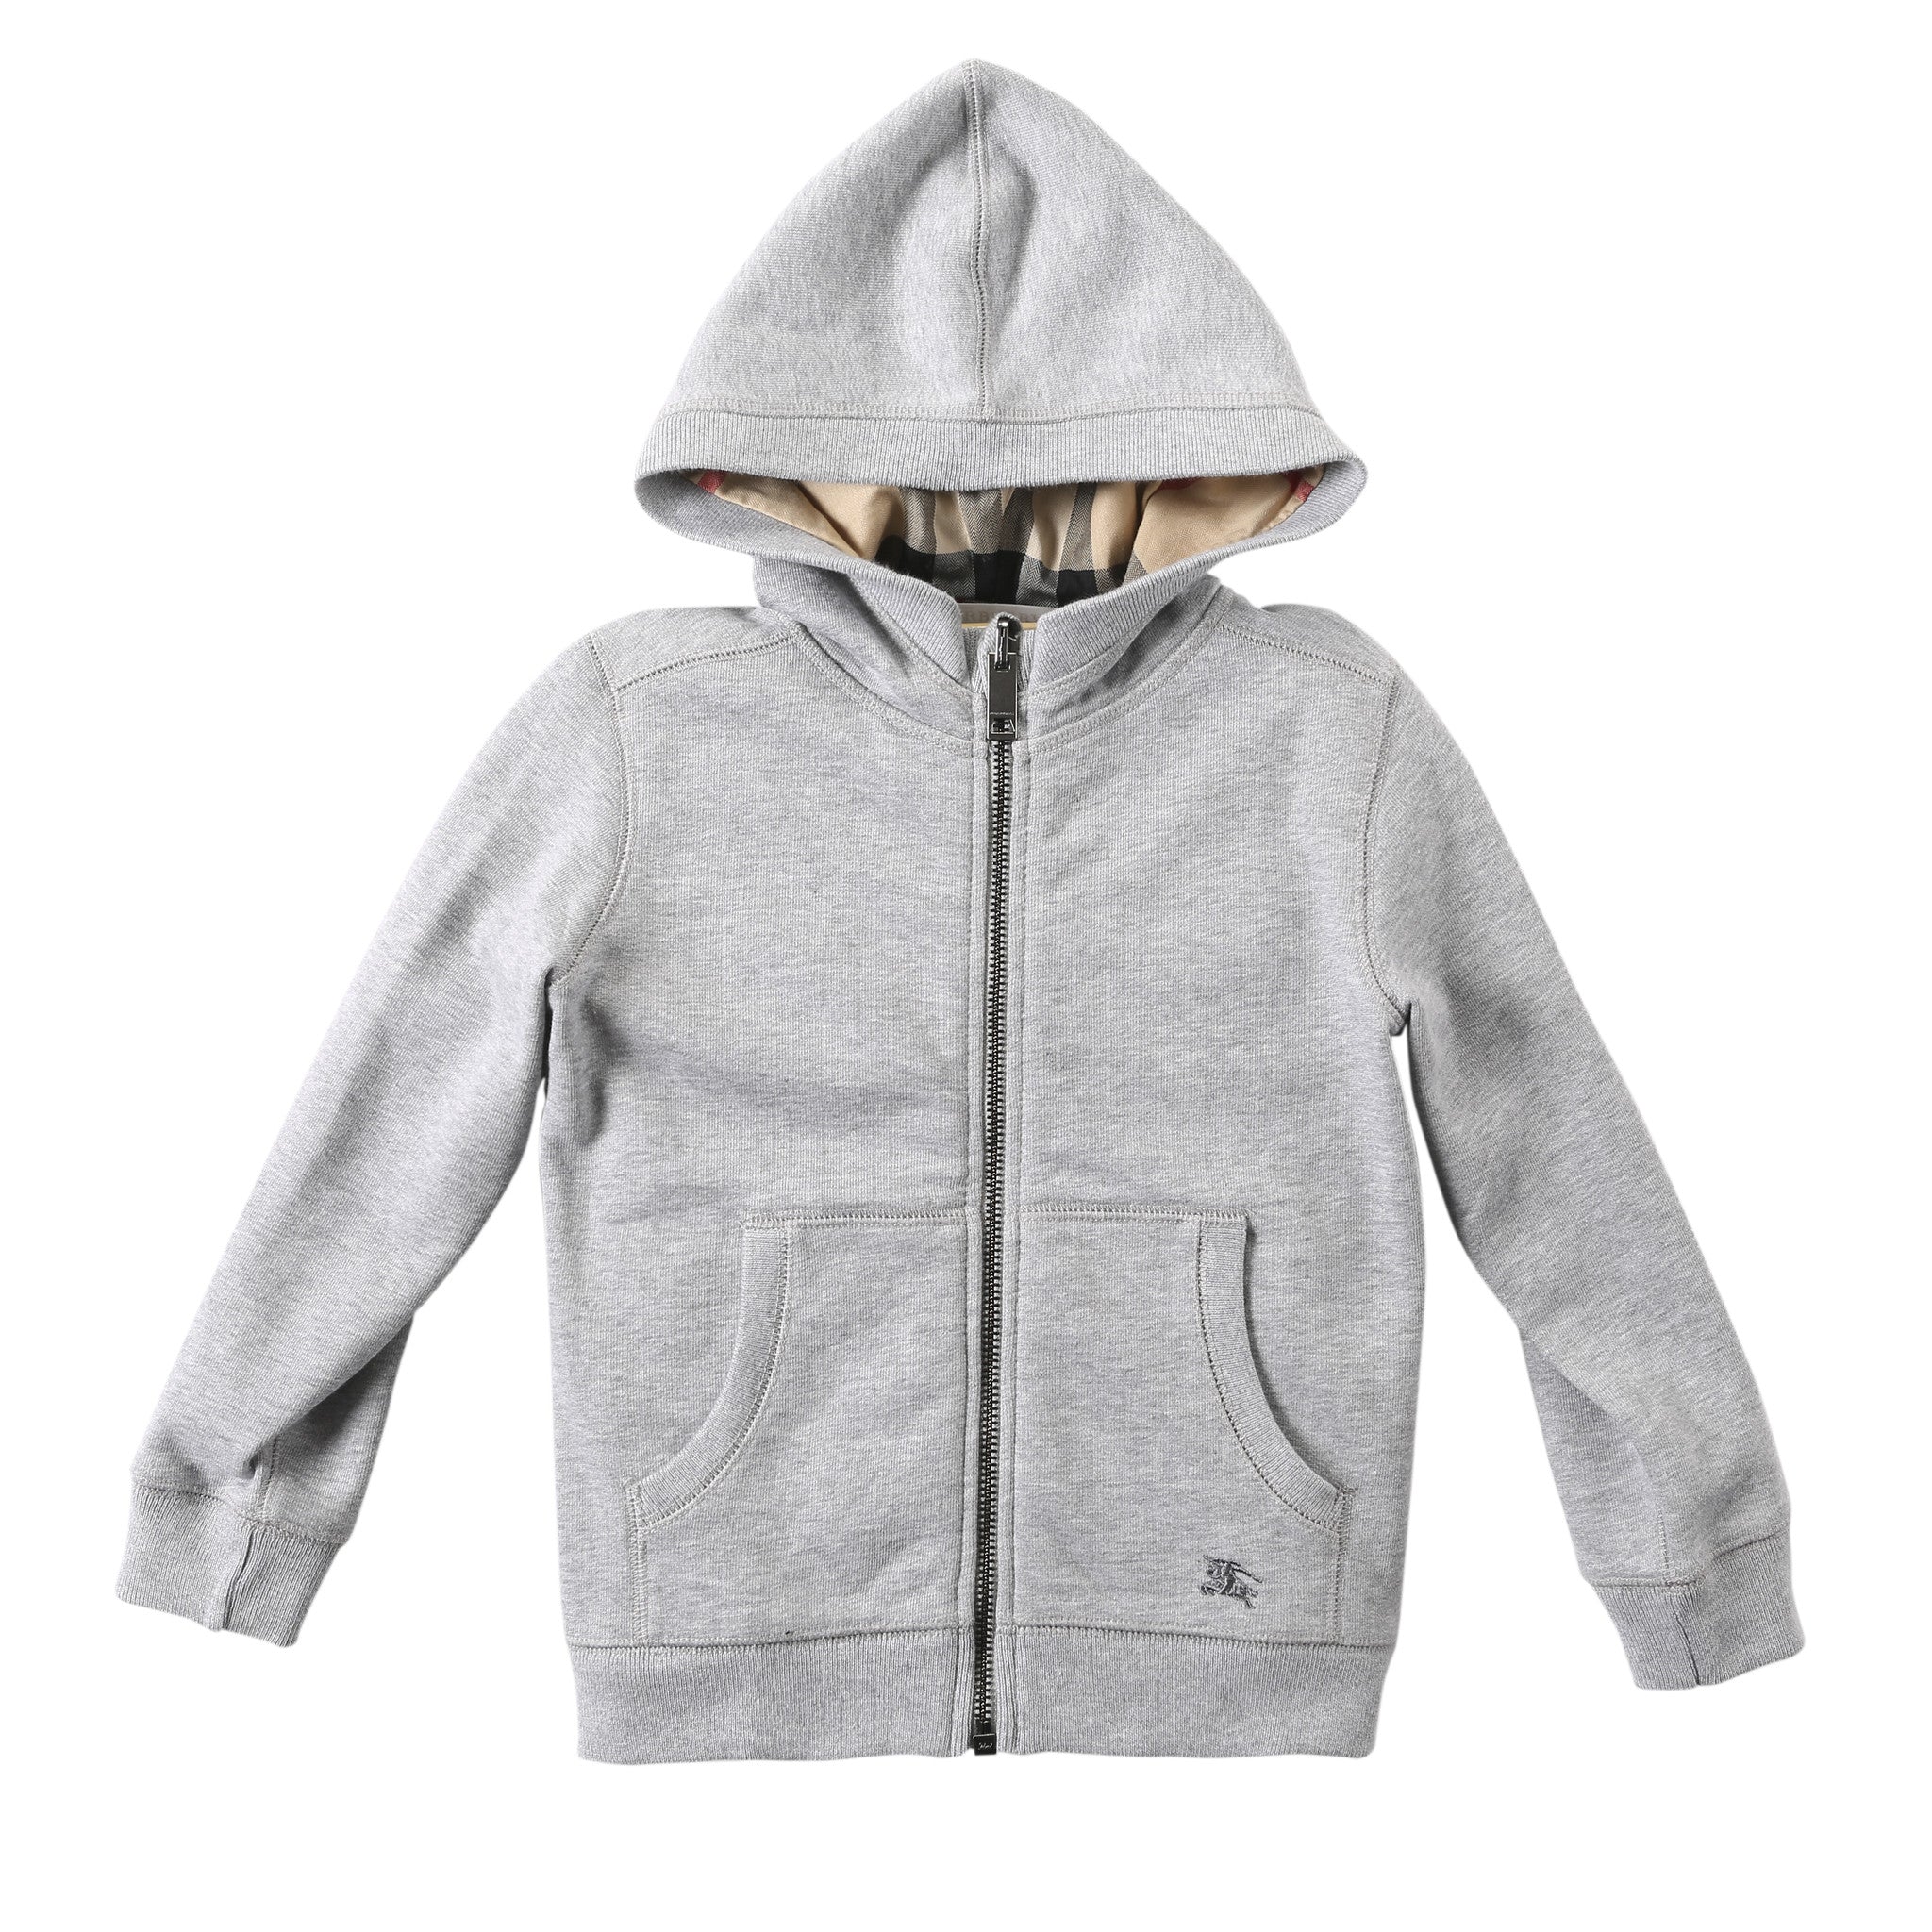 Boys Grey Cotton Jersey Hooded Zip-Up Top - CÉMAROSE | Children's Fashion Store - 1